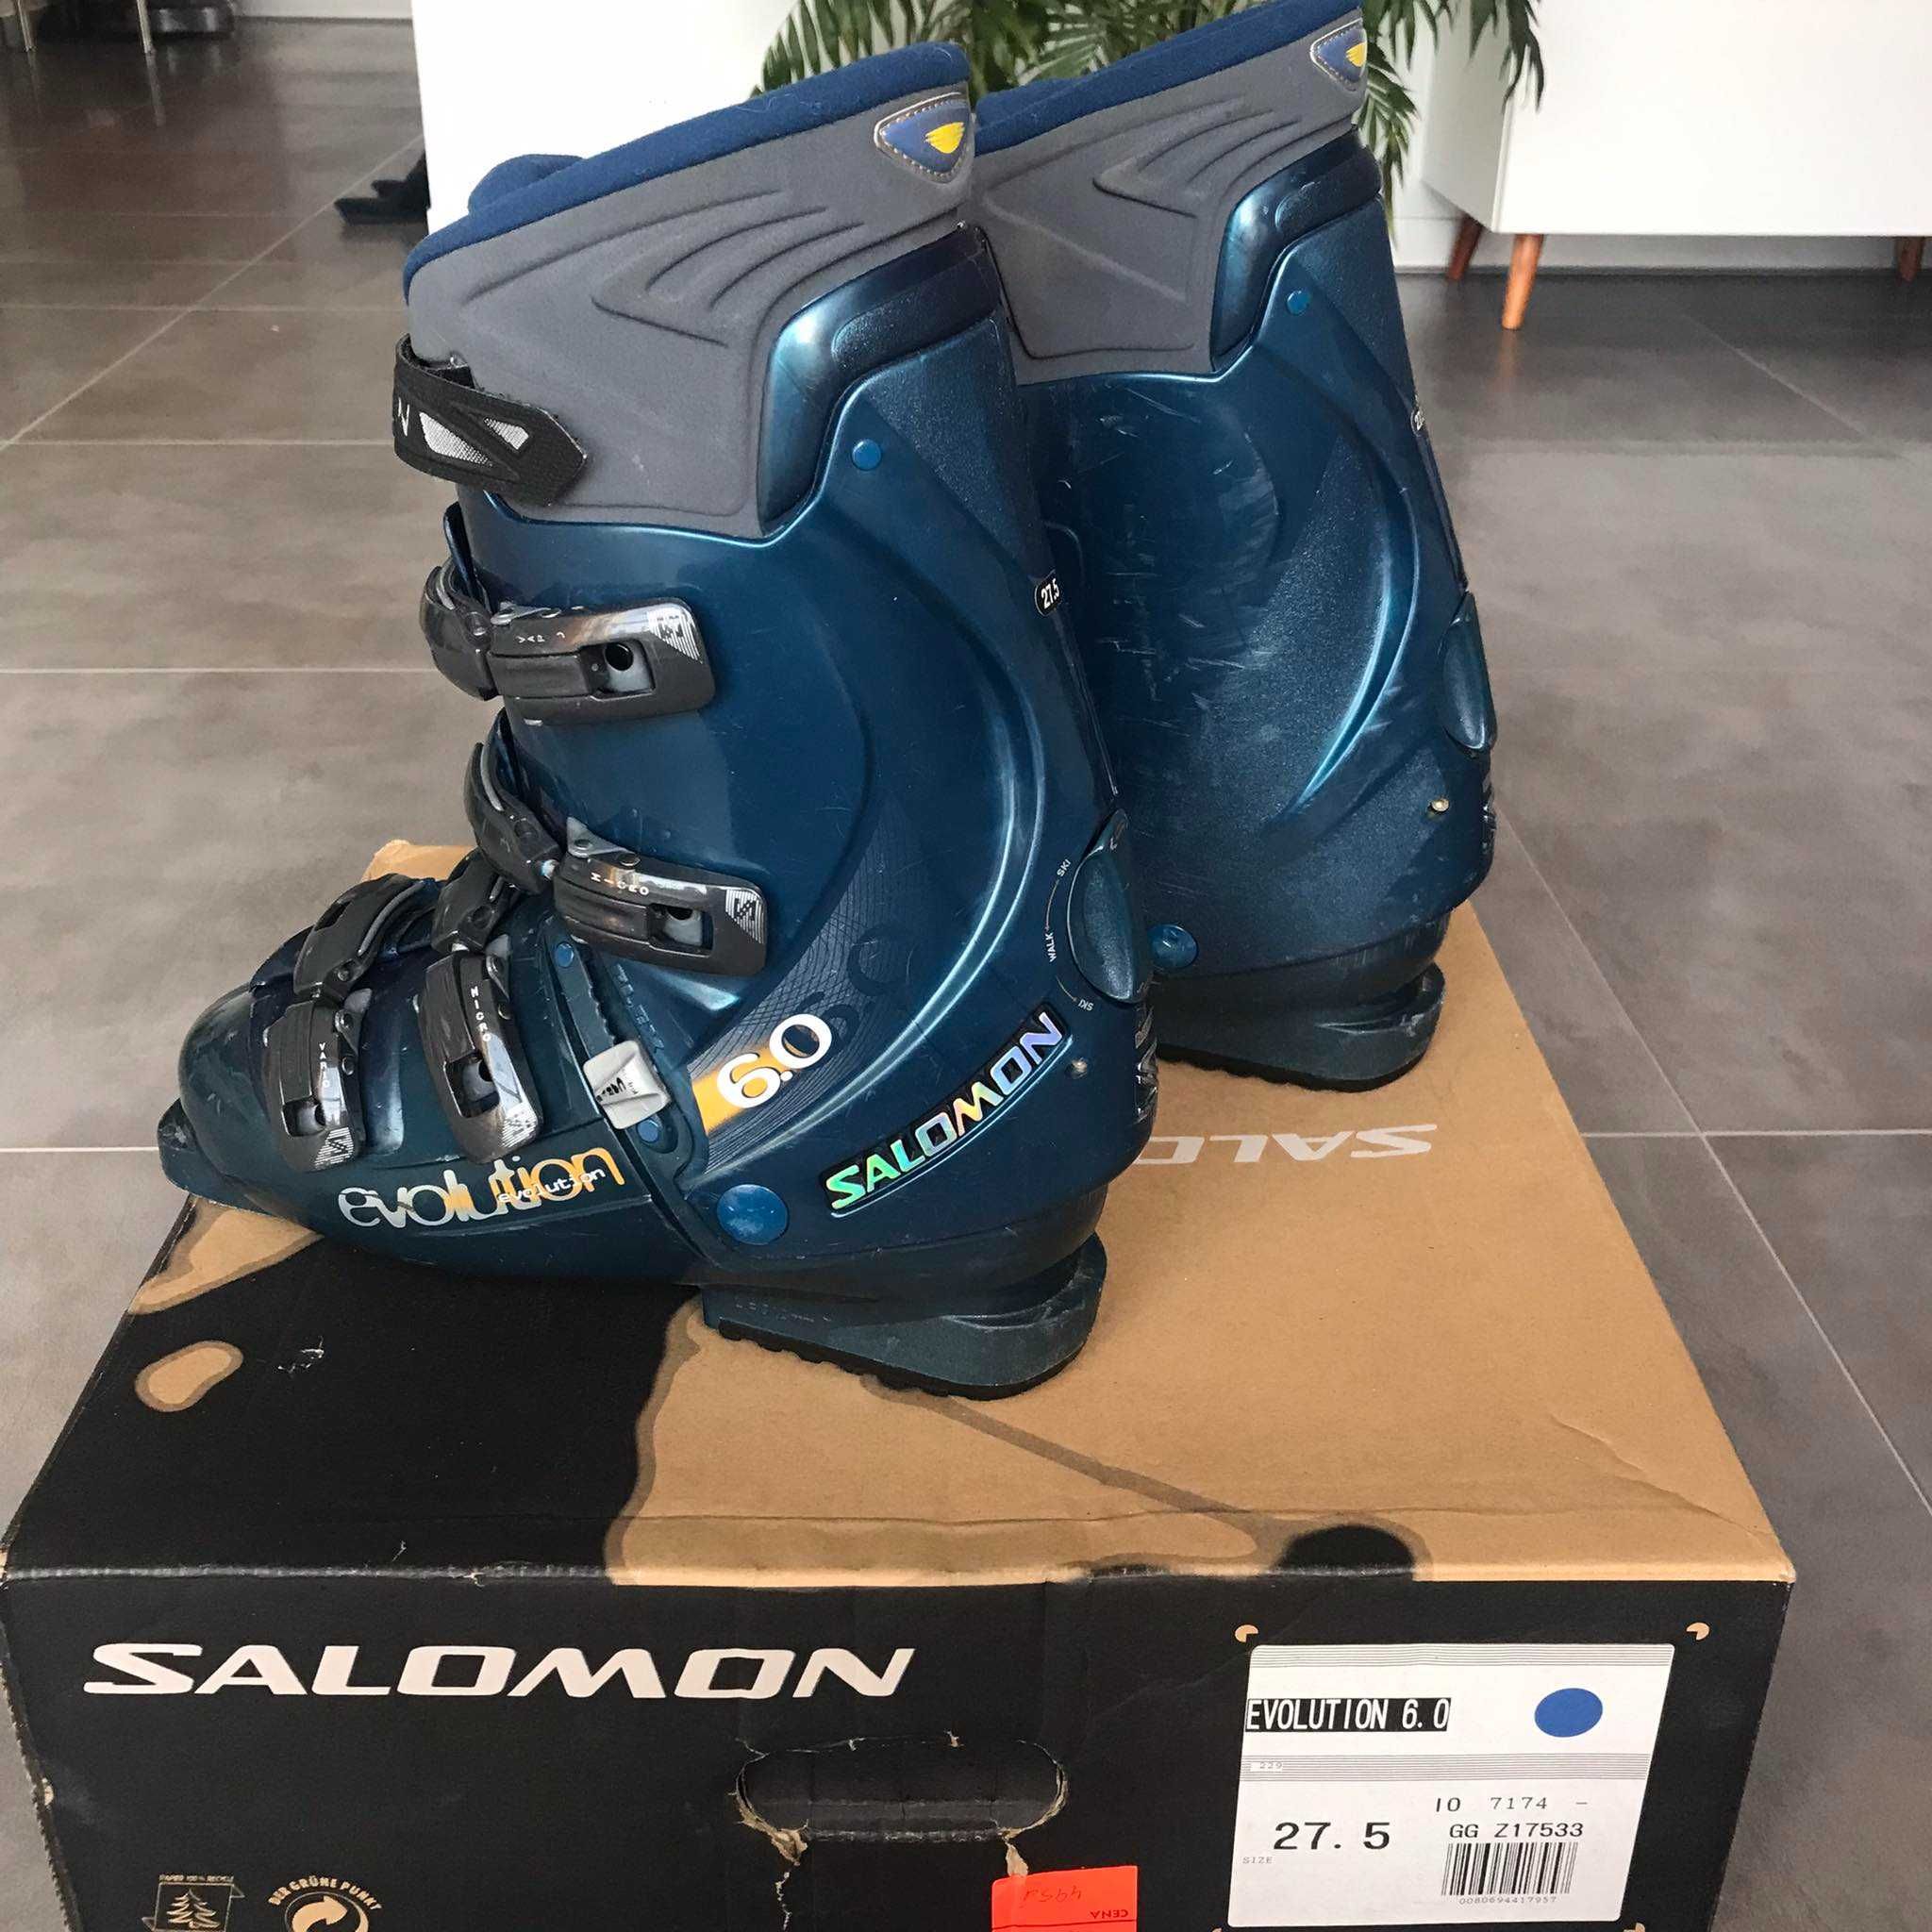 Buty narciarskie SALOMON Evolution 6.0 roz. 42